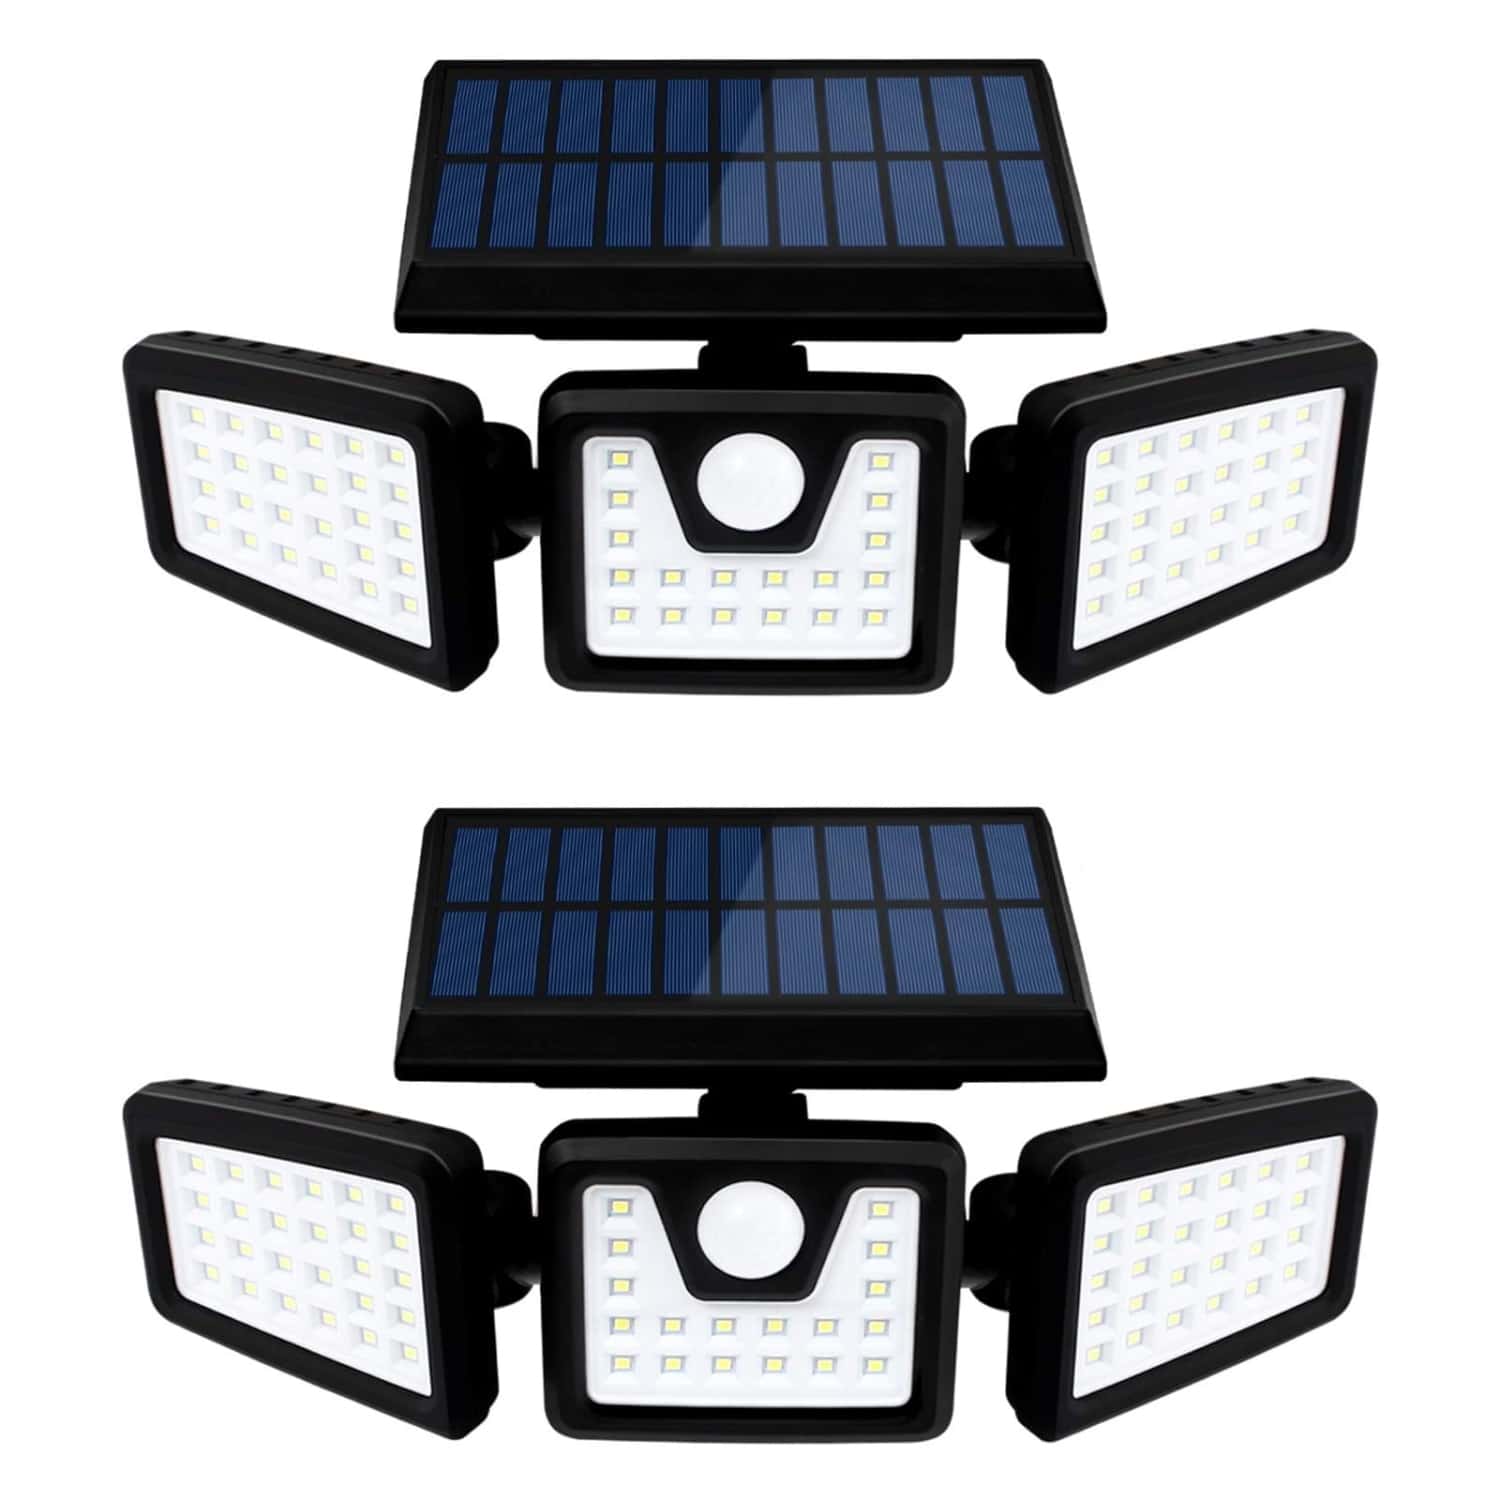 Otdair Solar Security Lights